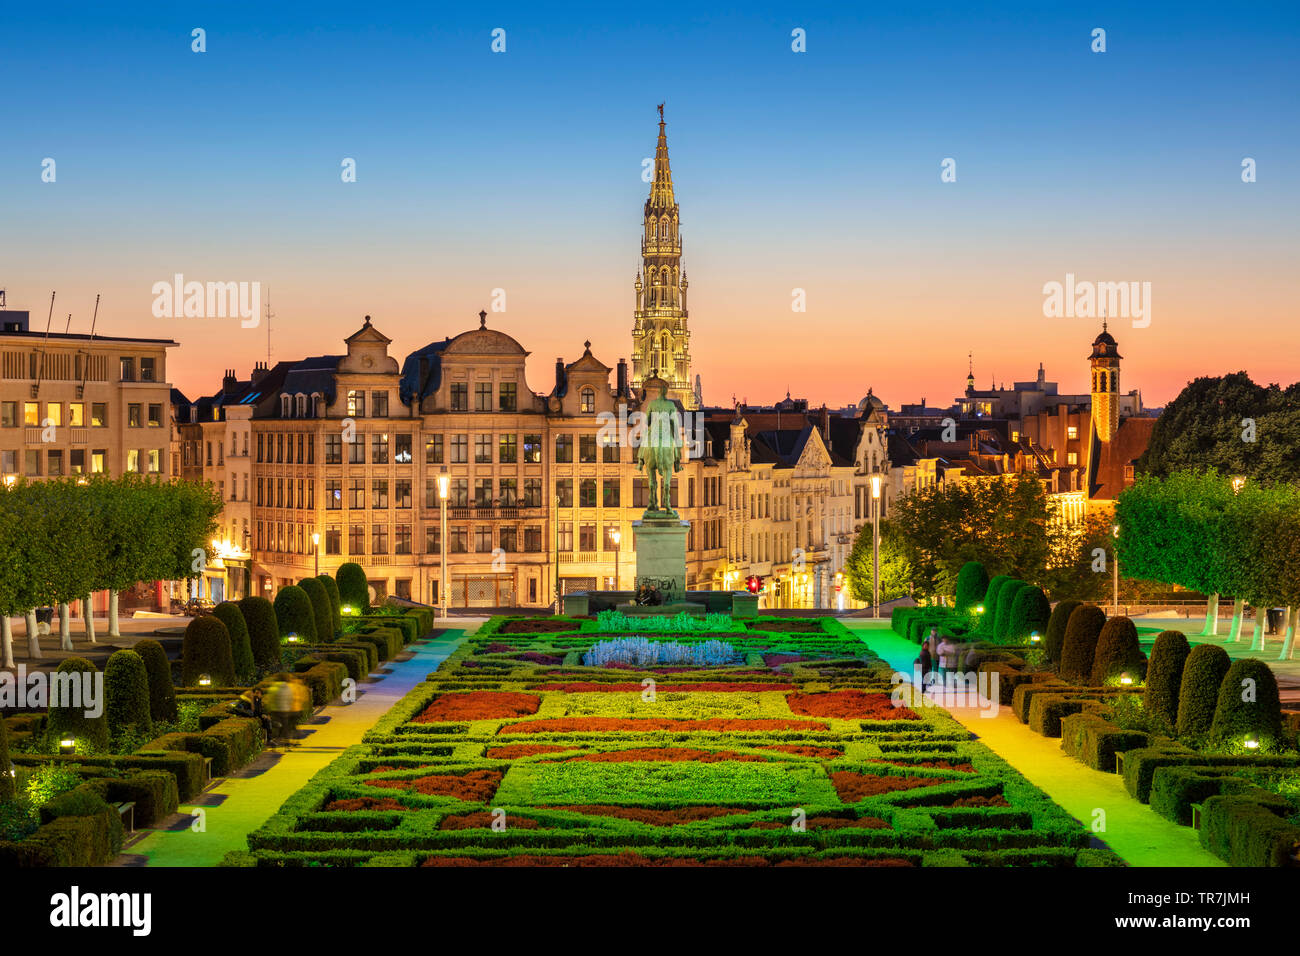 Sonnenuntergang Mont des Arts Garten Brüssel Belgien Eu Europa Stockfoto